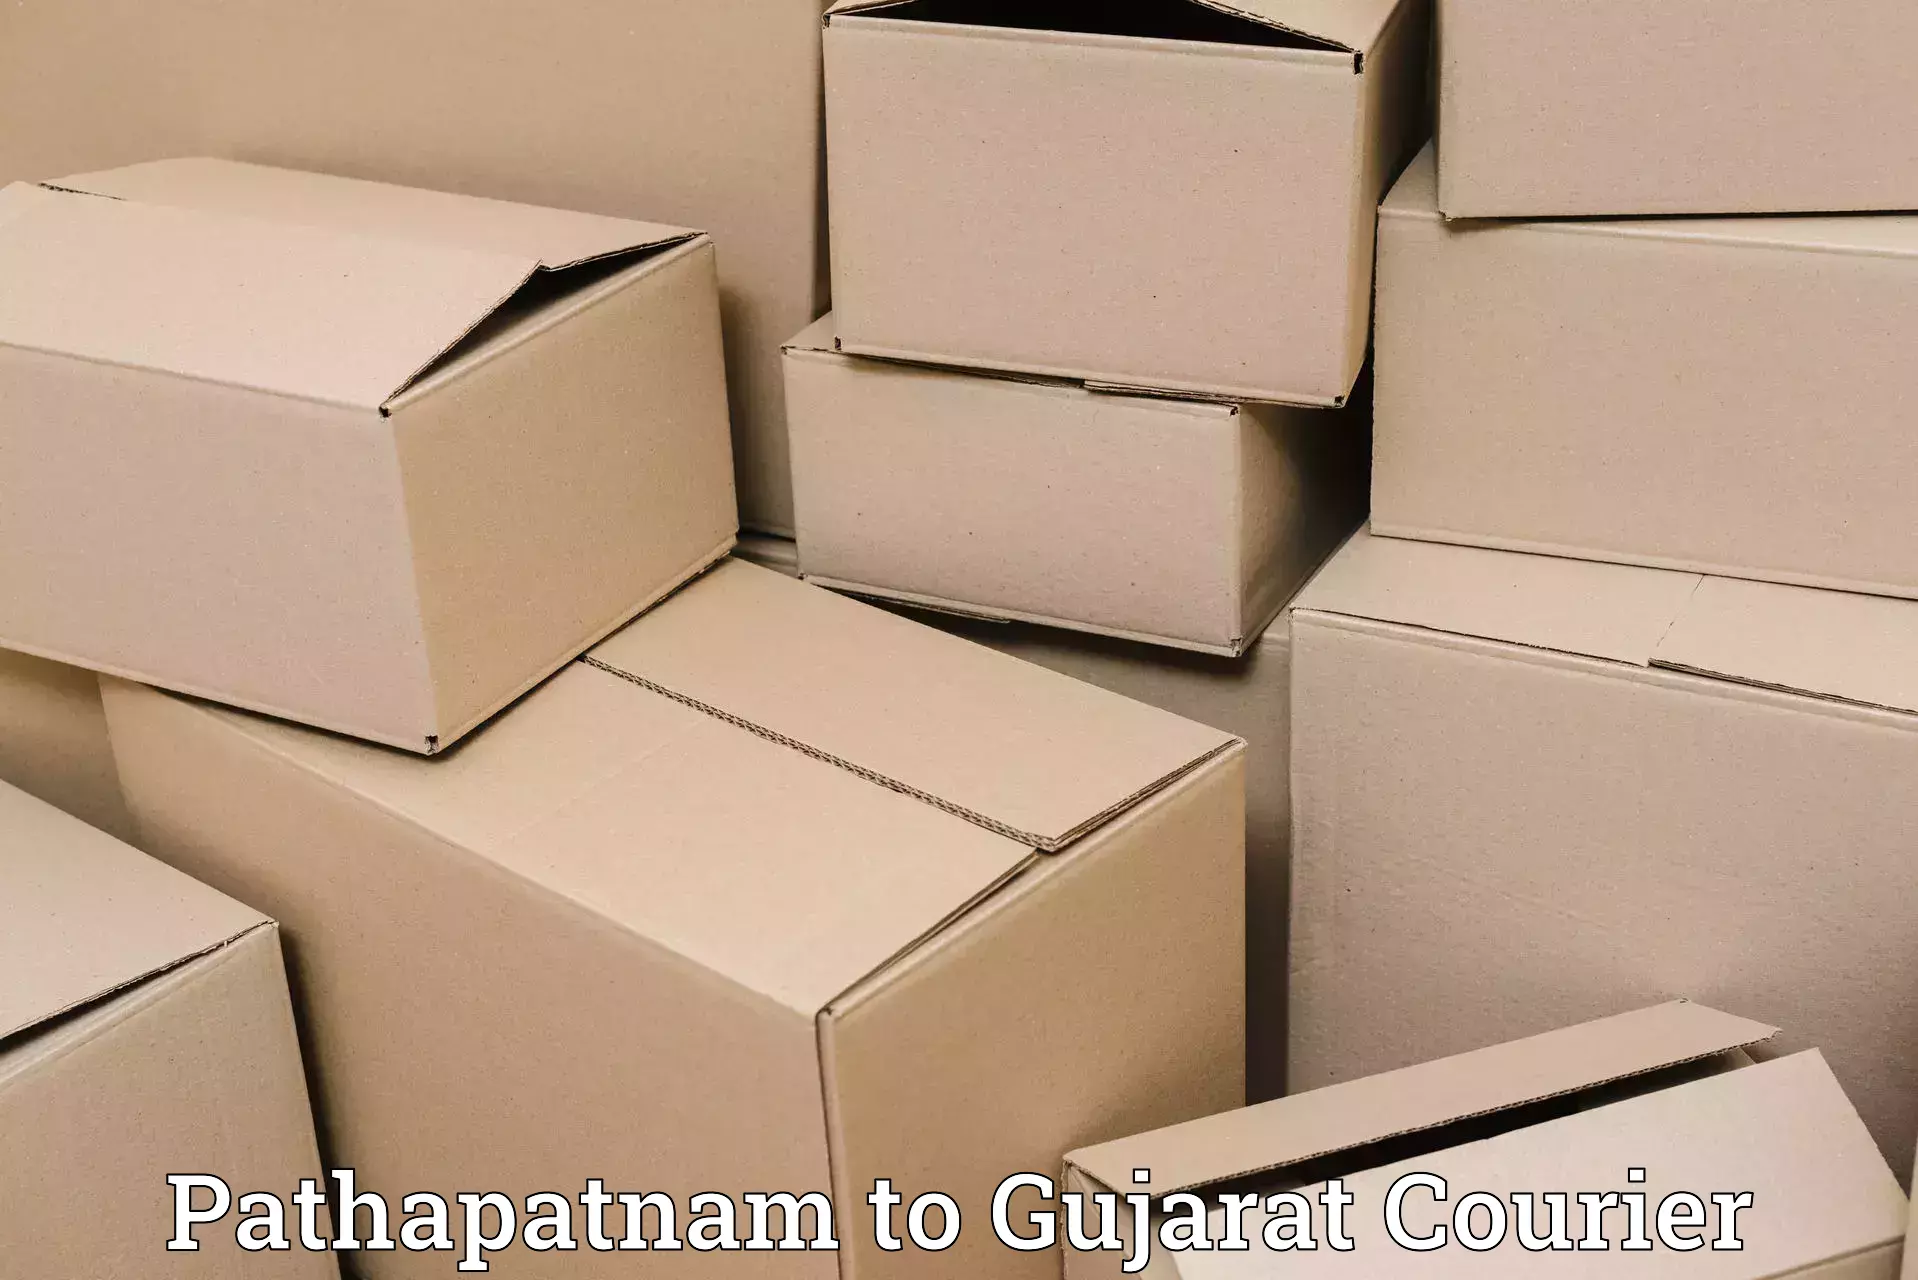 Logistics service provider Pathapatnam to Gujarat